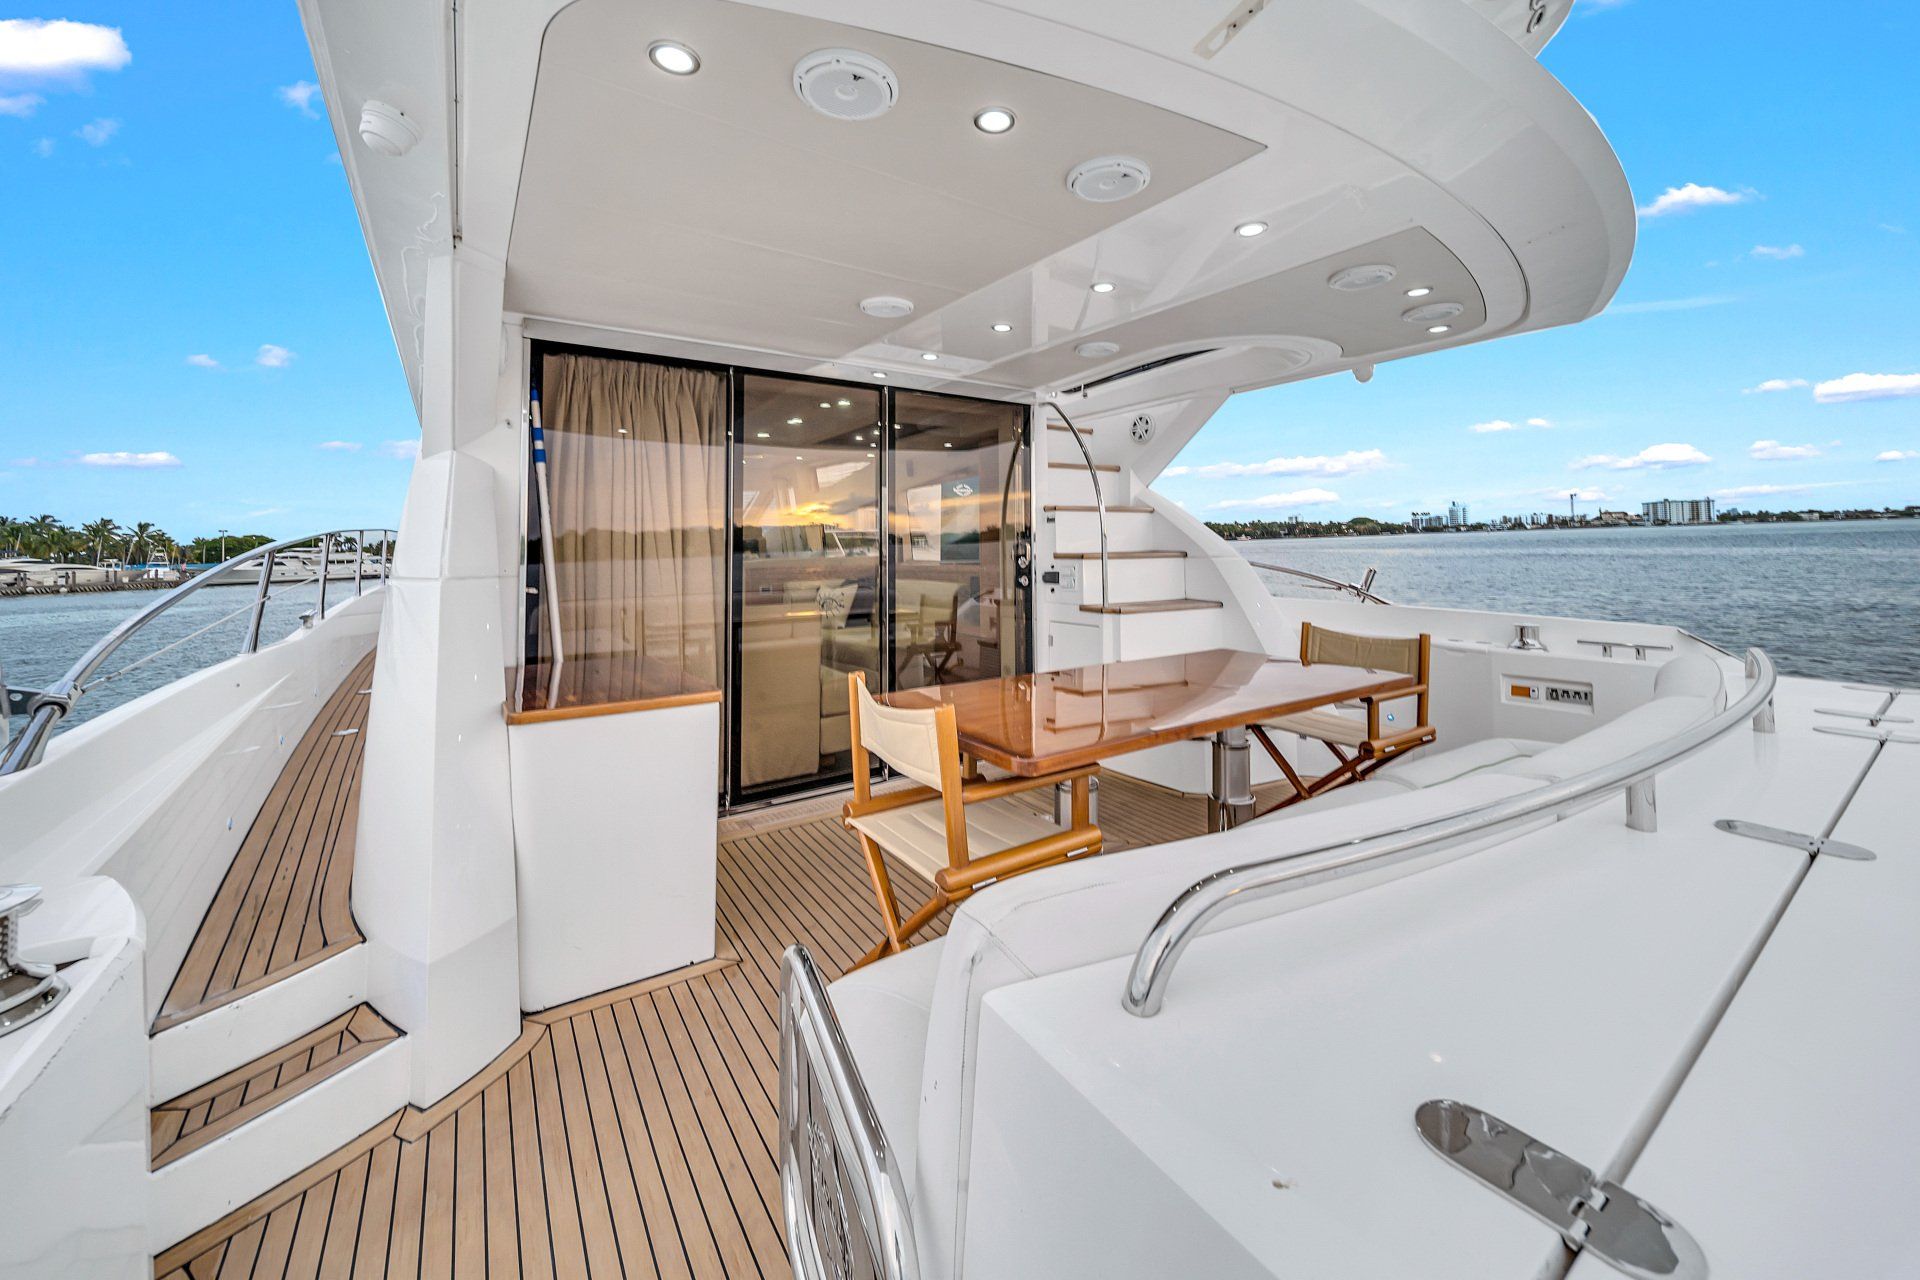 luxury yacht for rent miami